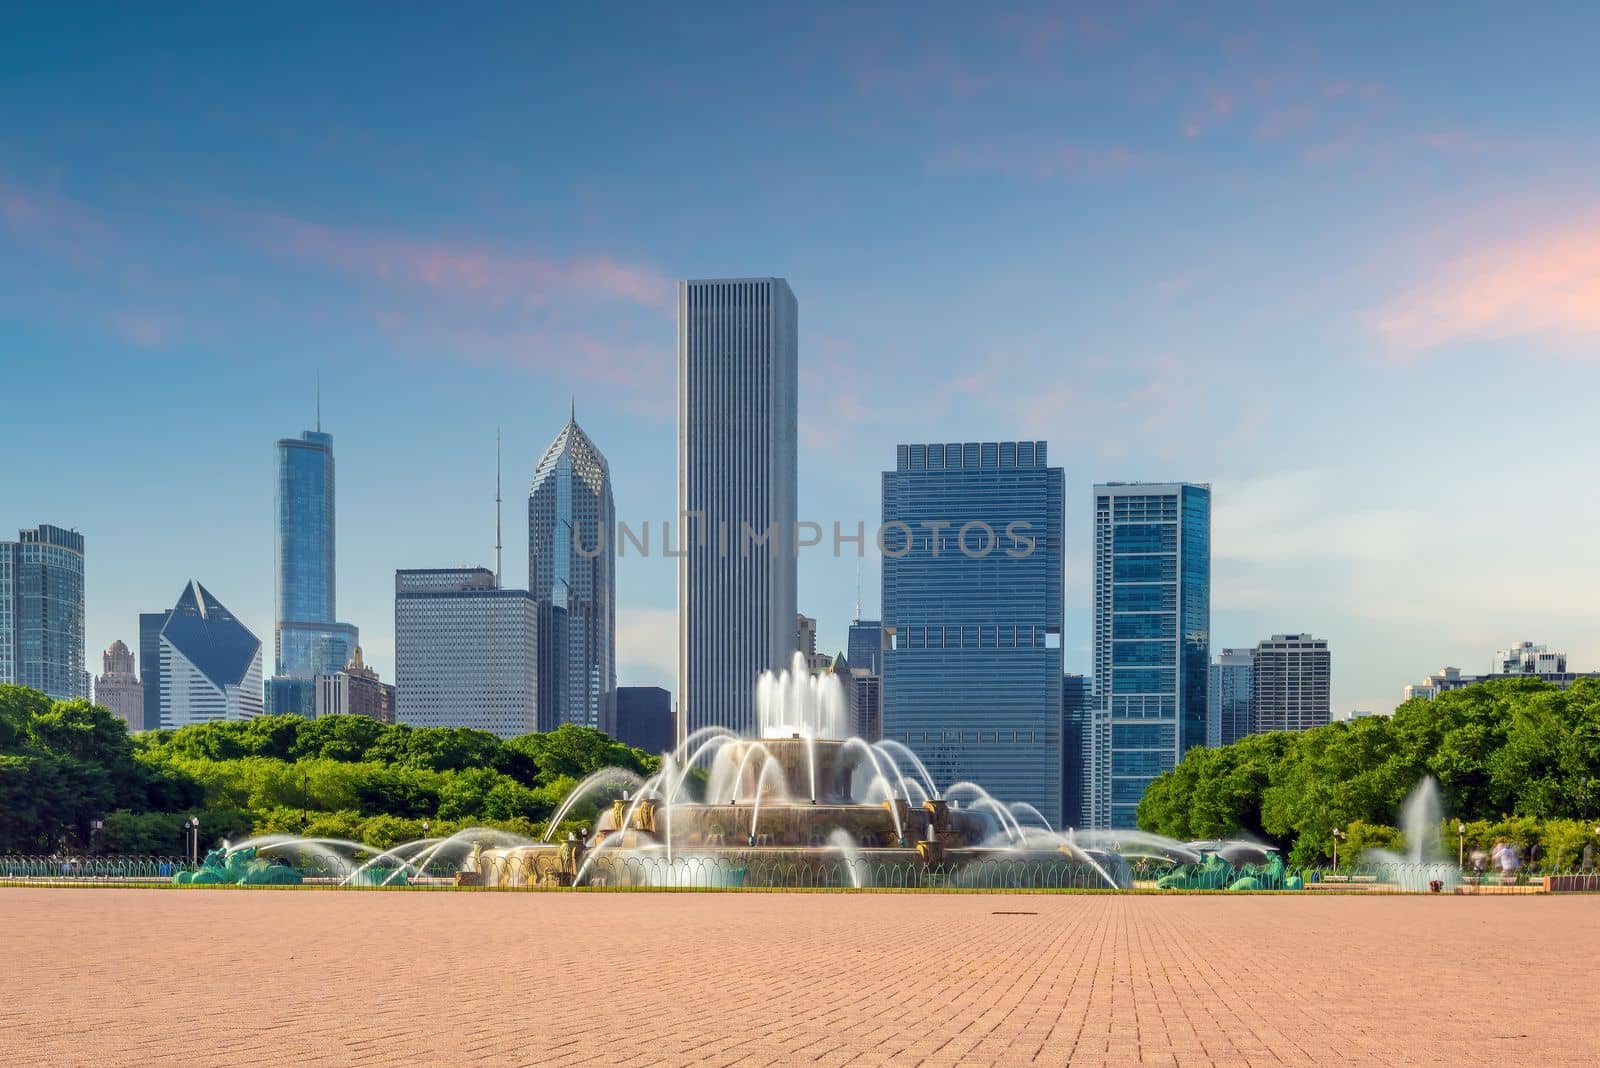 Buckingham fountain in Grant Park, Chicago  Illinois USA